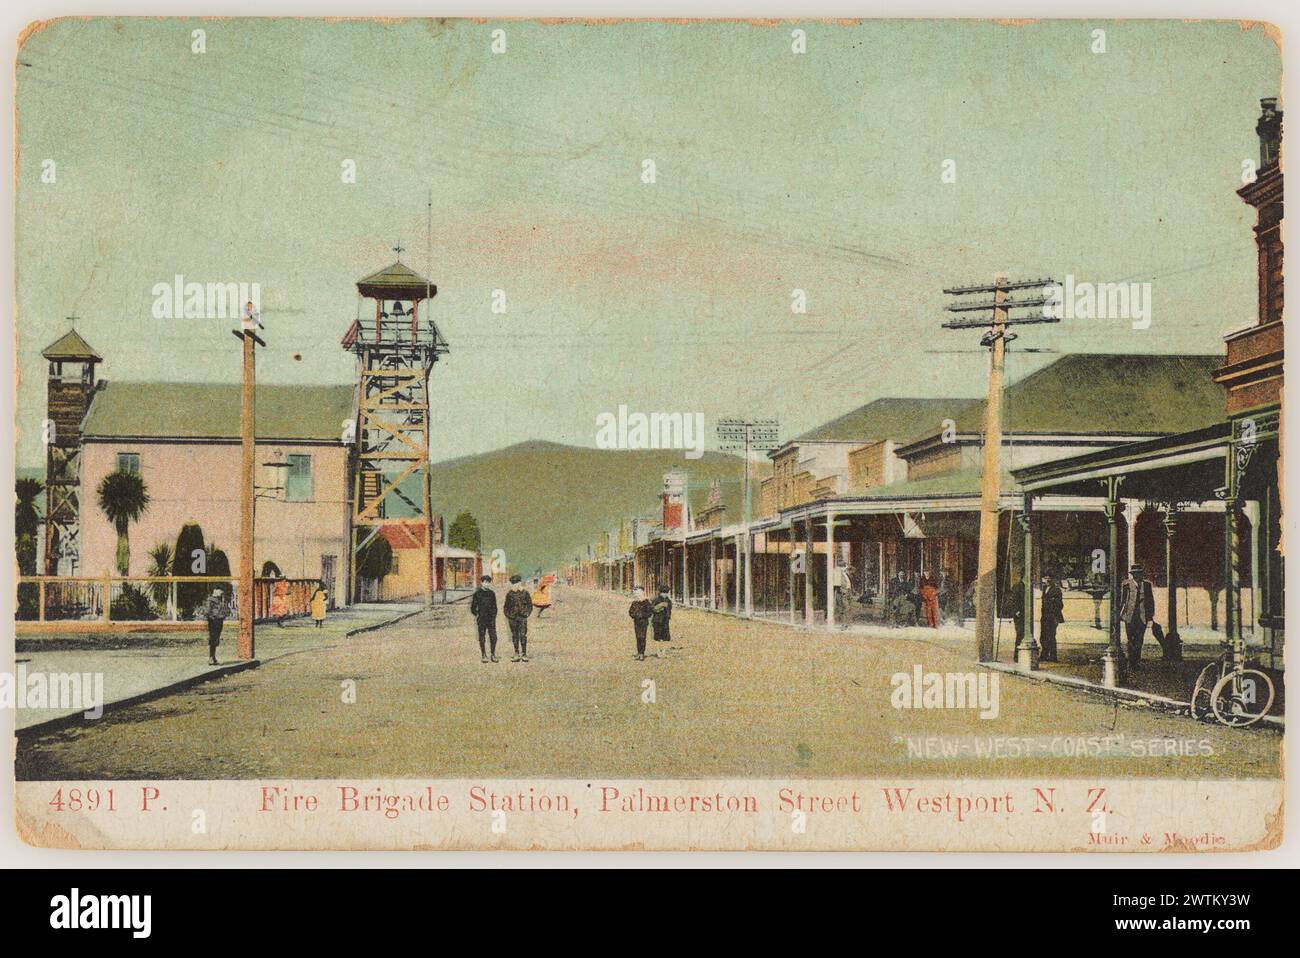 Fire Brigade Station, Palmerston Street, Westport, New Zealand photographic postcards Stock Photo